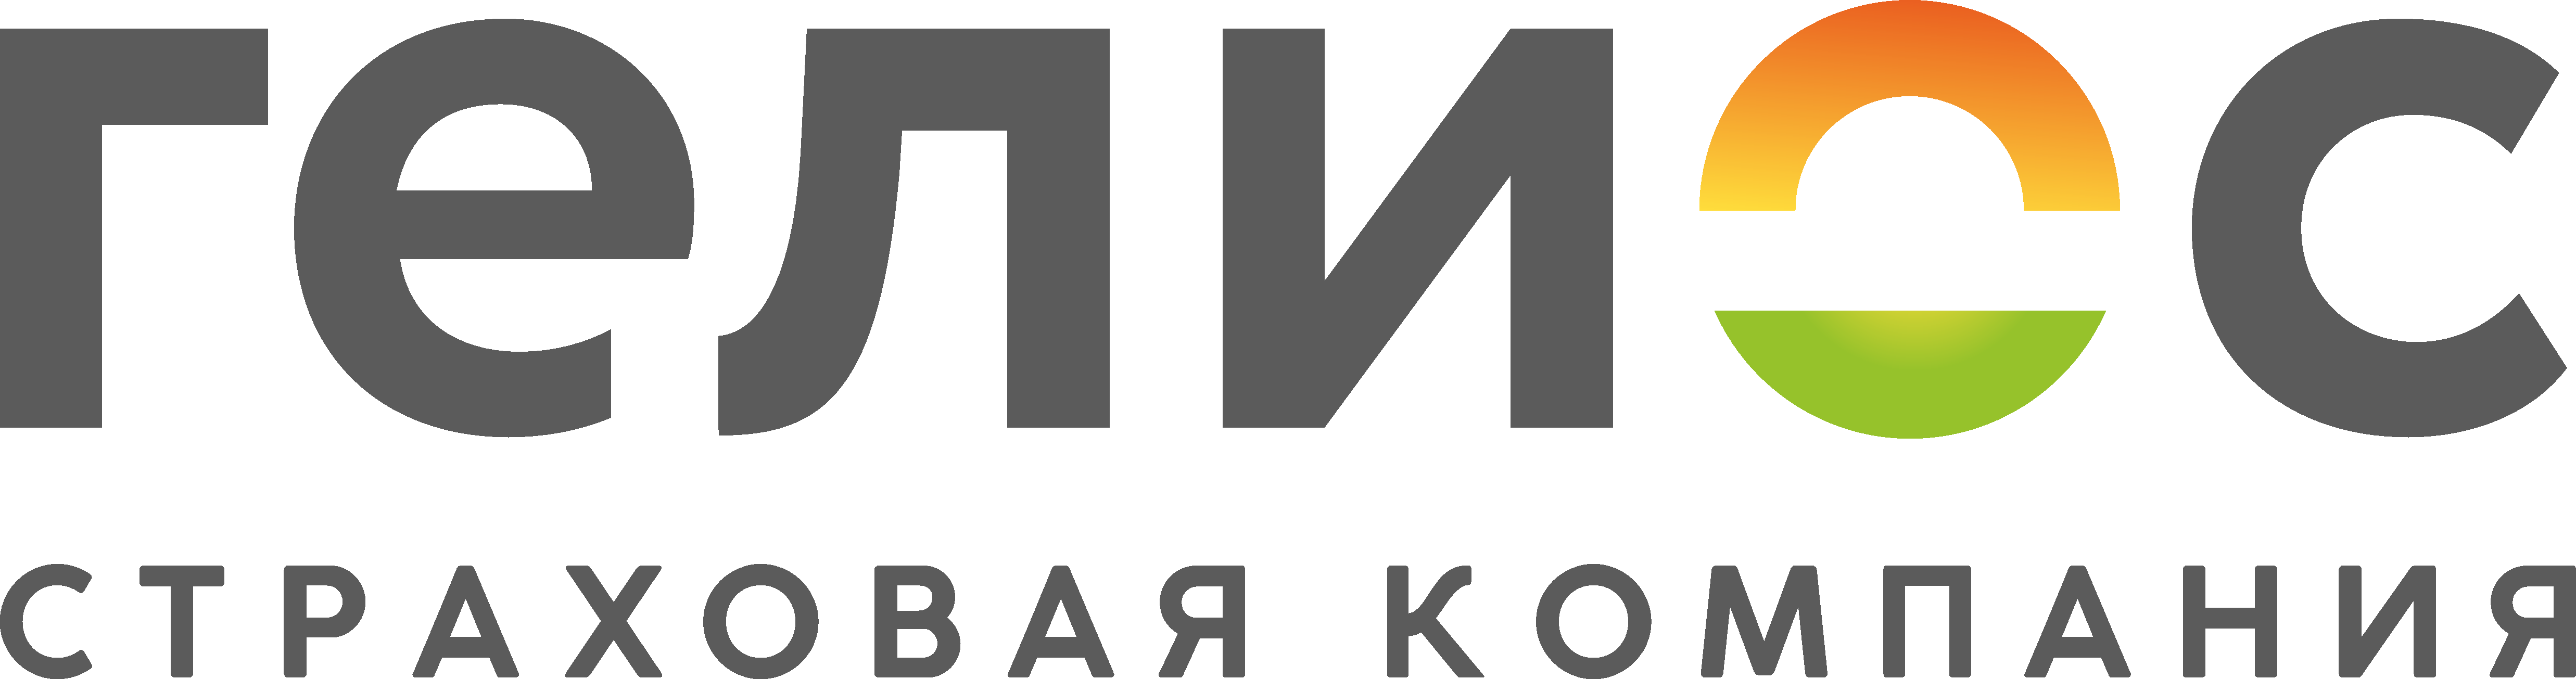 logo_png-1.png